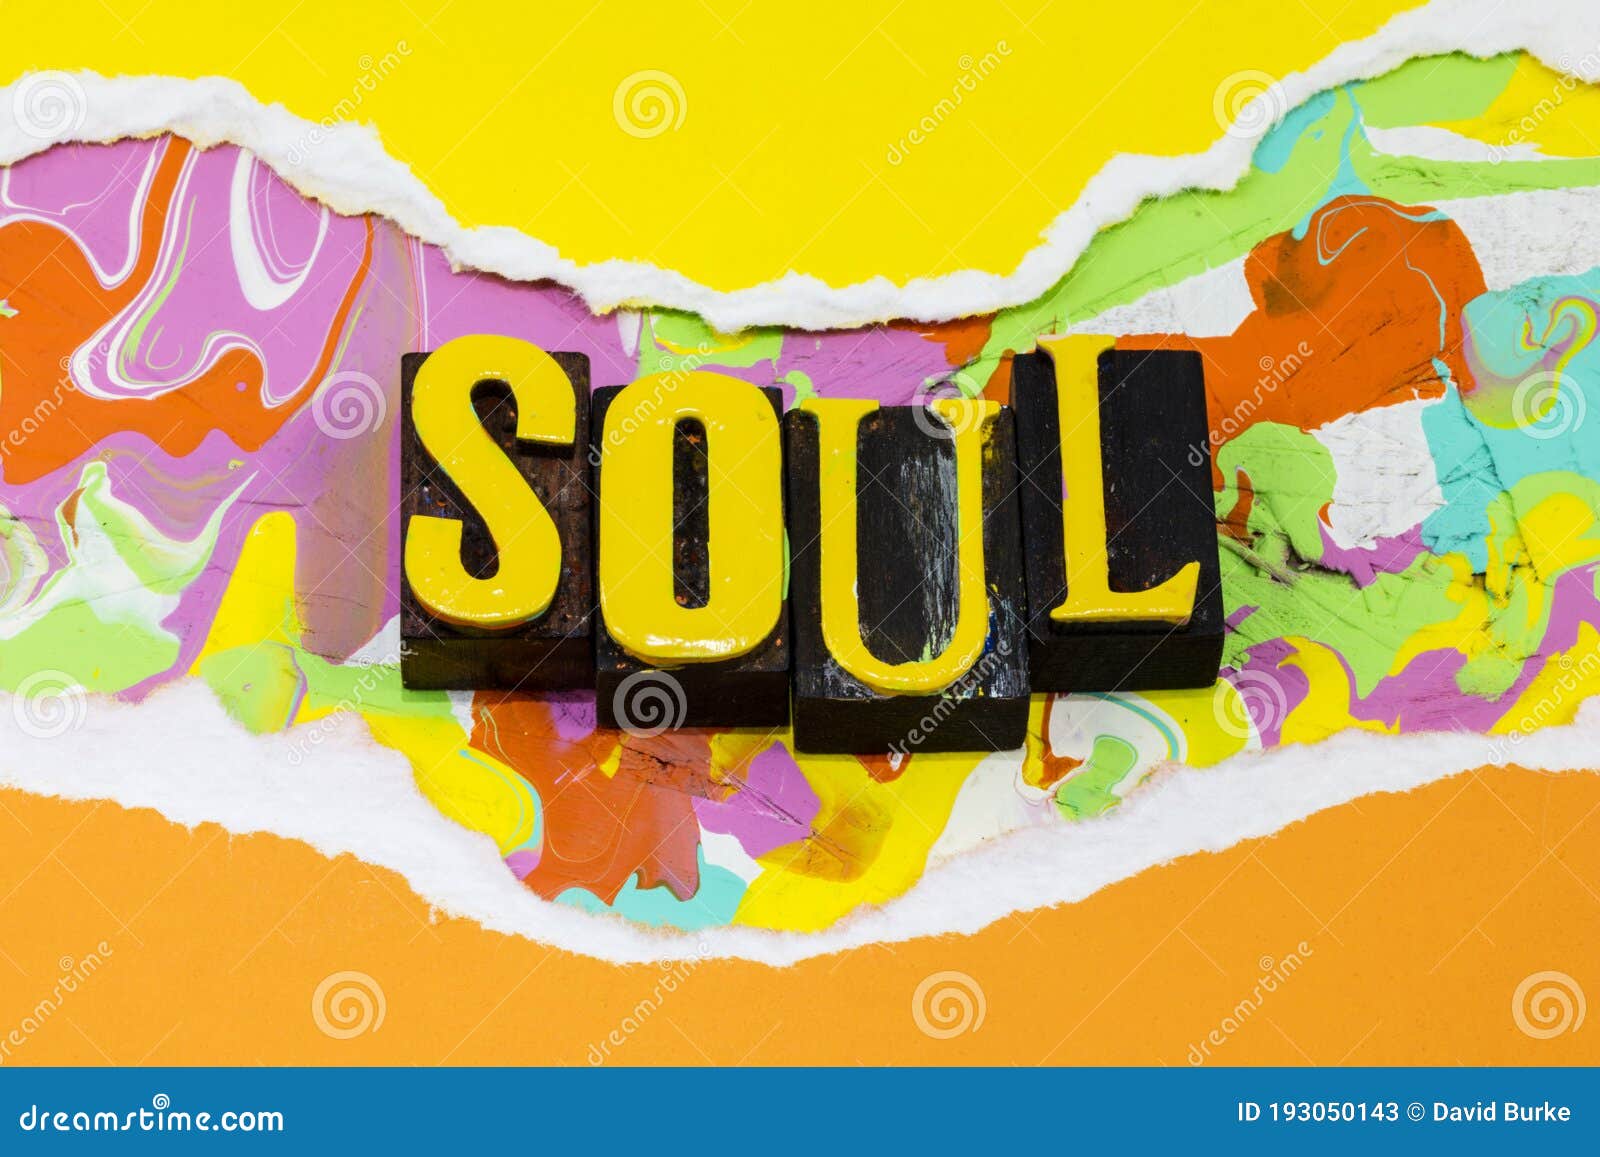 soul music rhythm blues gospel spiritual peace freedom spirituality